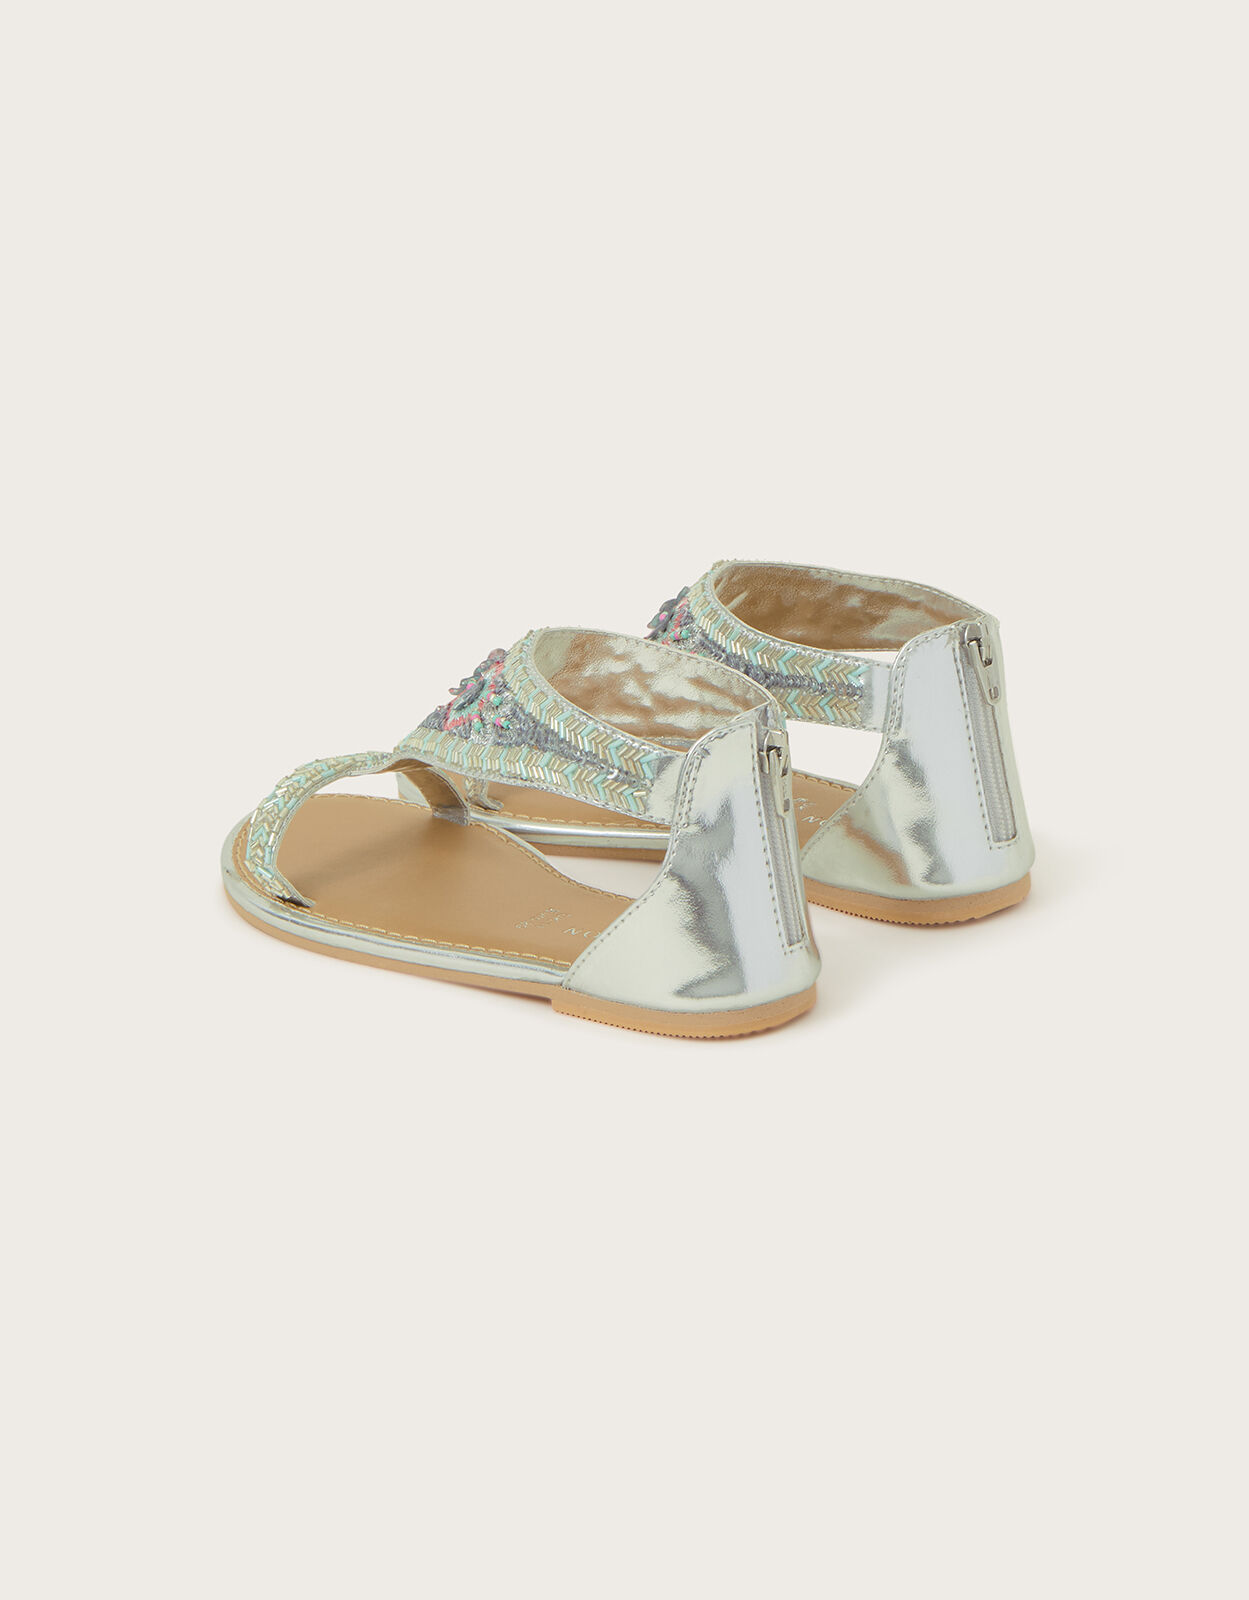 Girls Carters Silver Sandals Size 7c | eBay